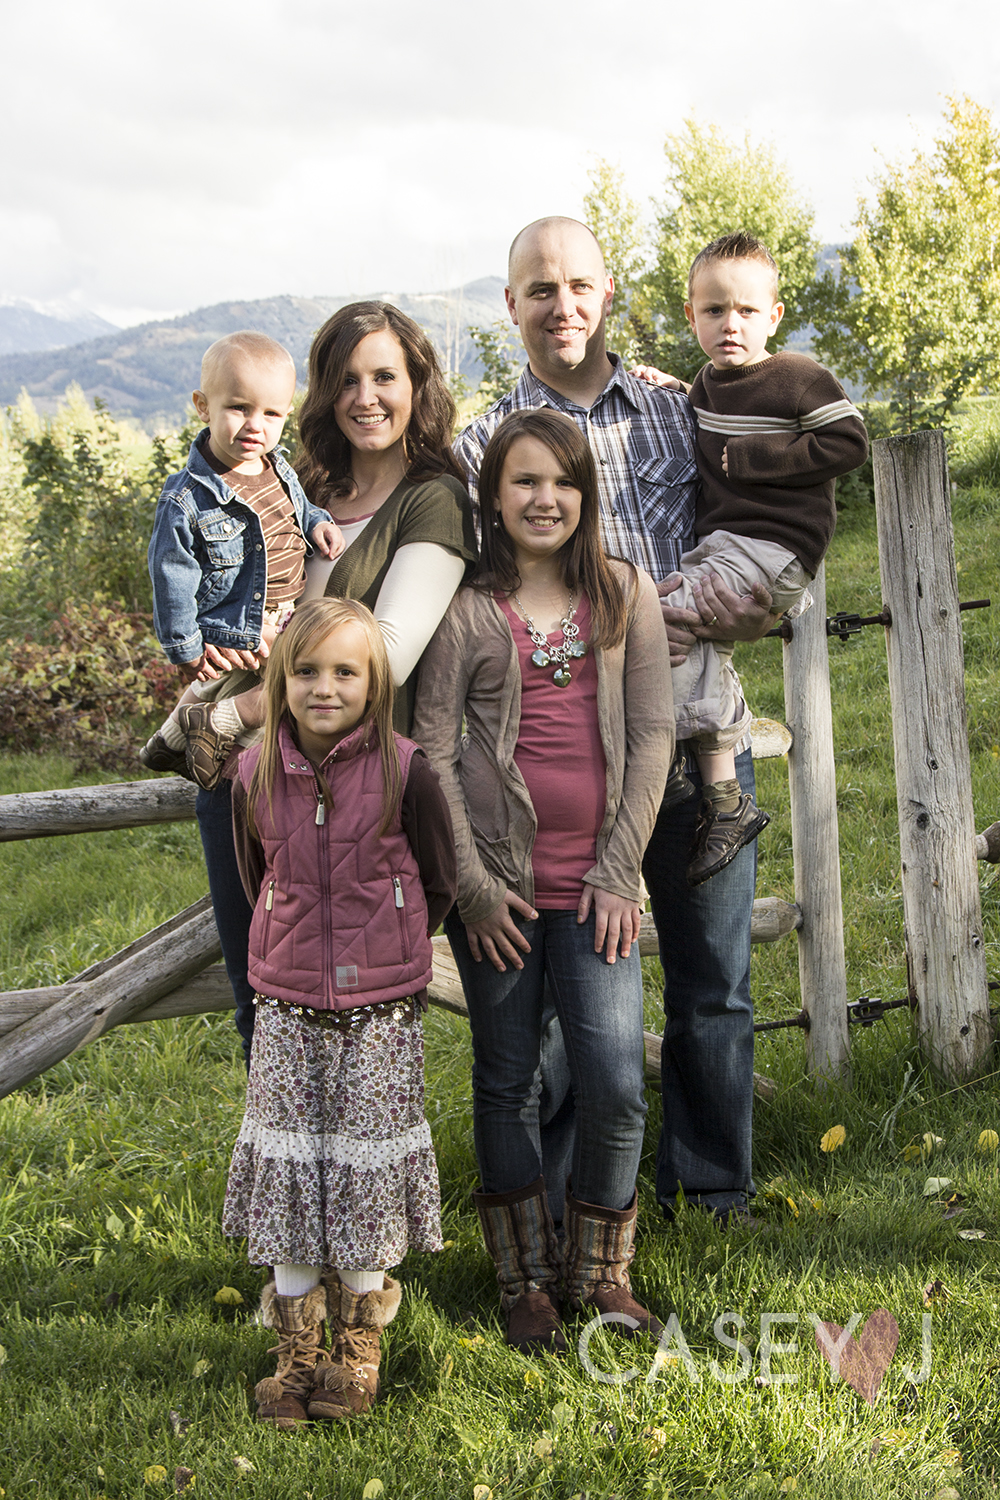 Casey J Photography, Family Portraits, Children, Idaho